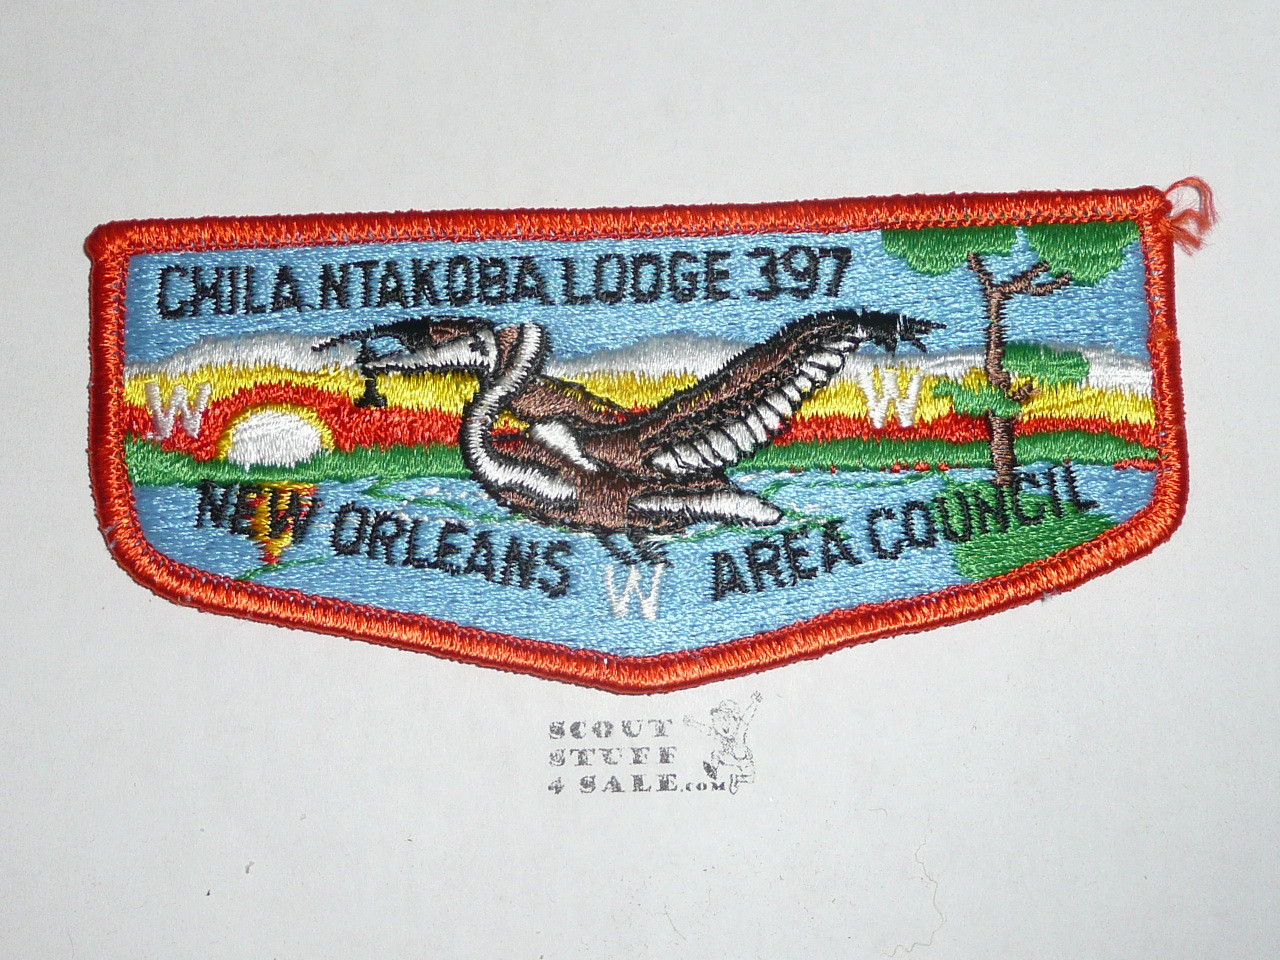 Order of the Arrow Lodge #397 Chilantakoba s7b Flap Patch